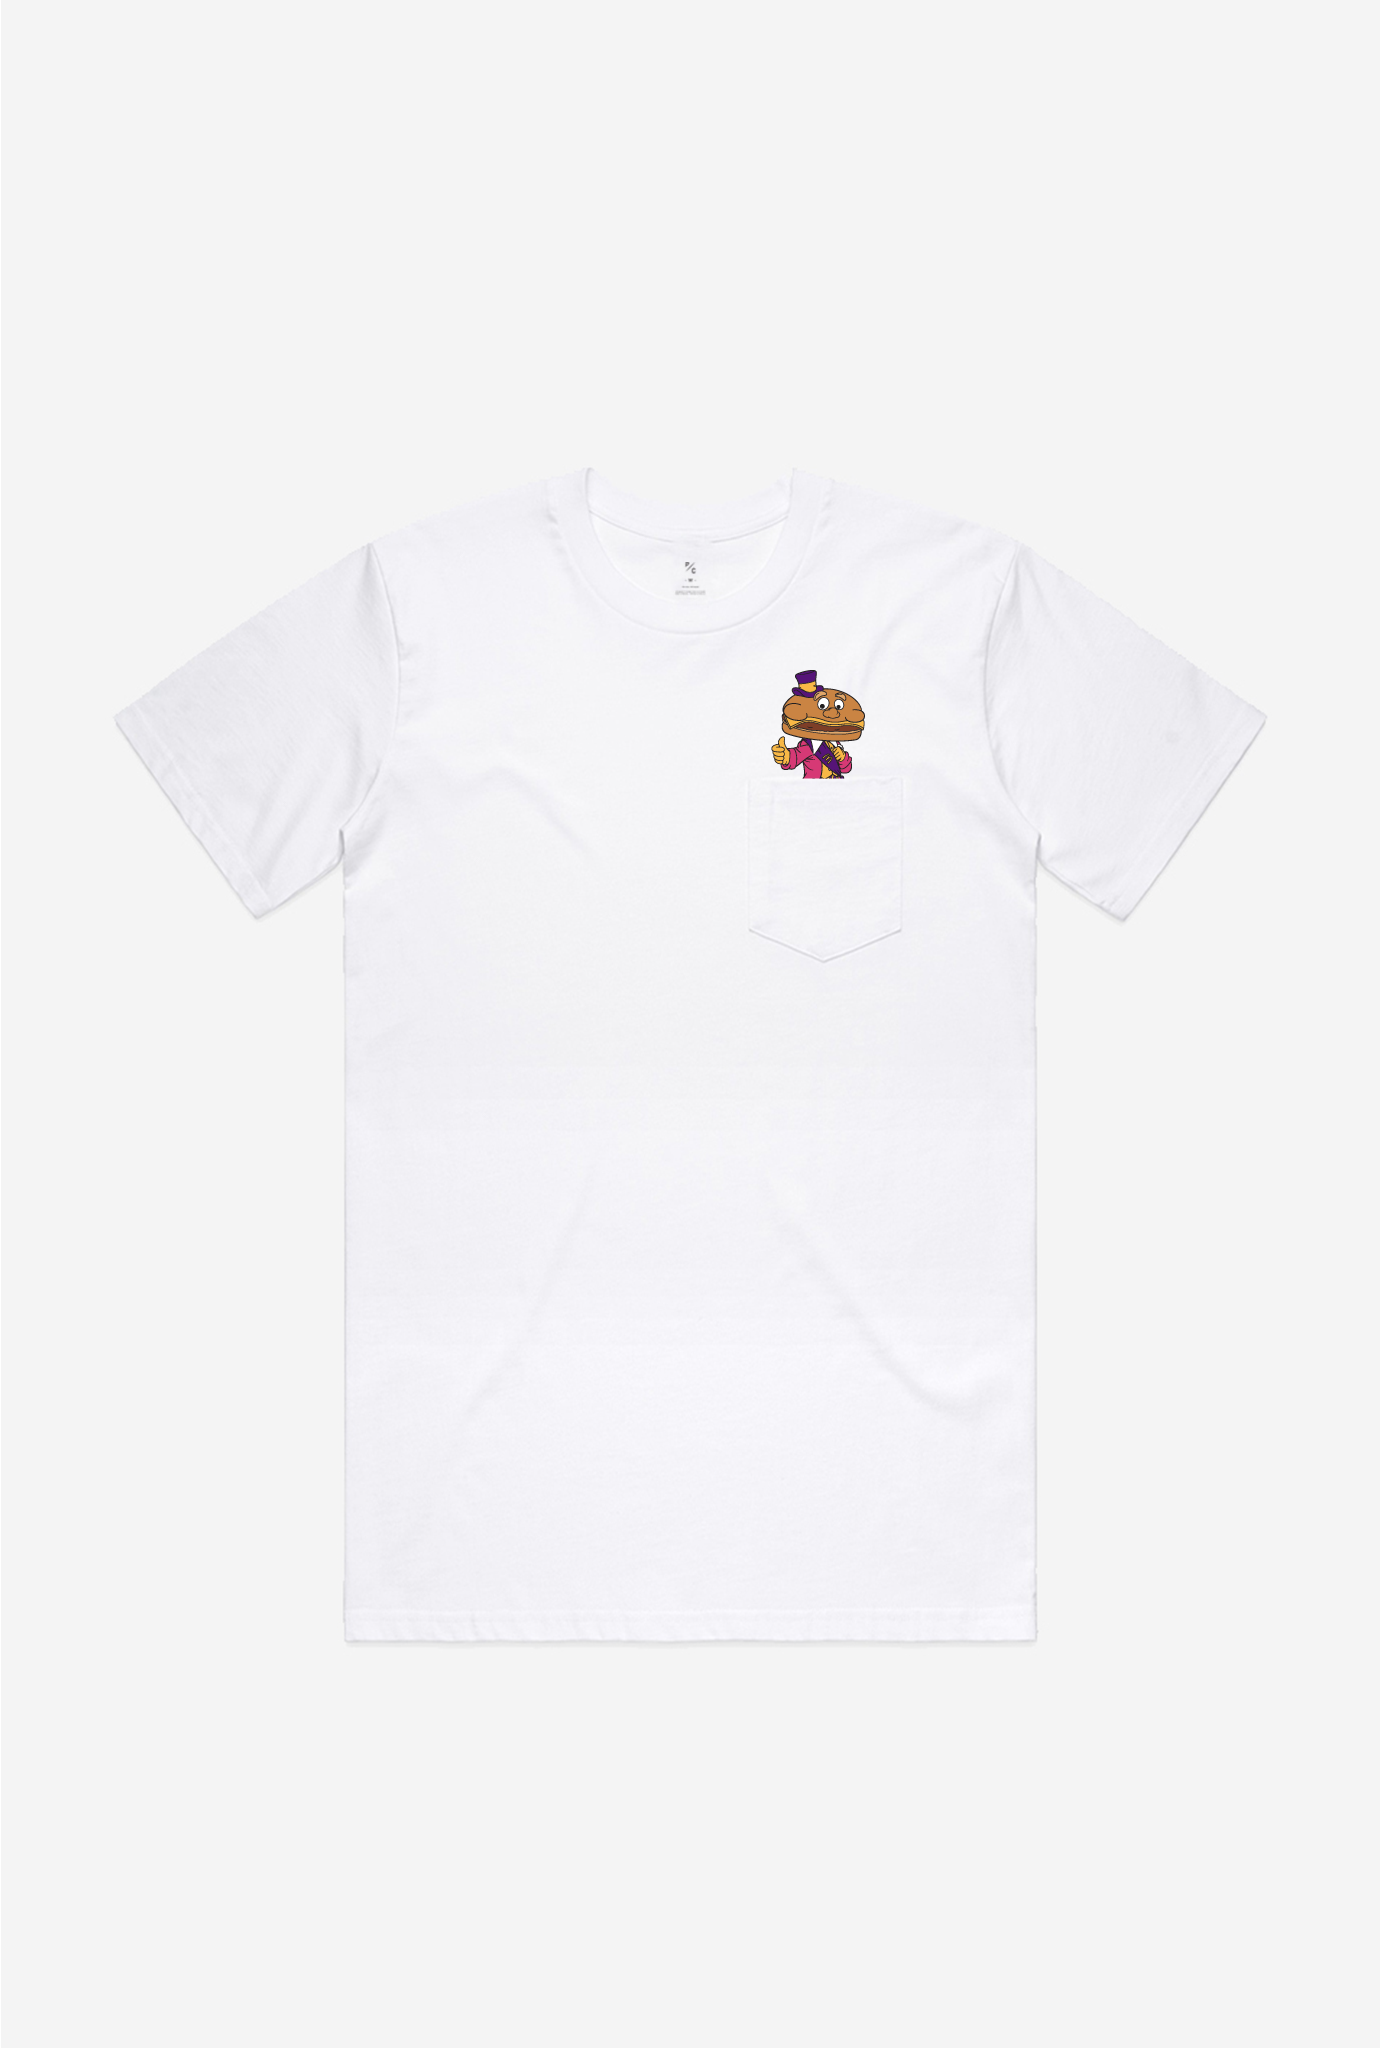 P/C x McDonald's Mayor McCheese Pocket T-Shirt - White